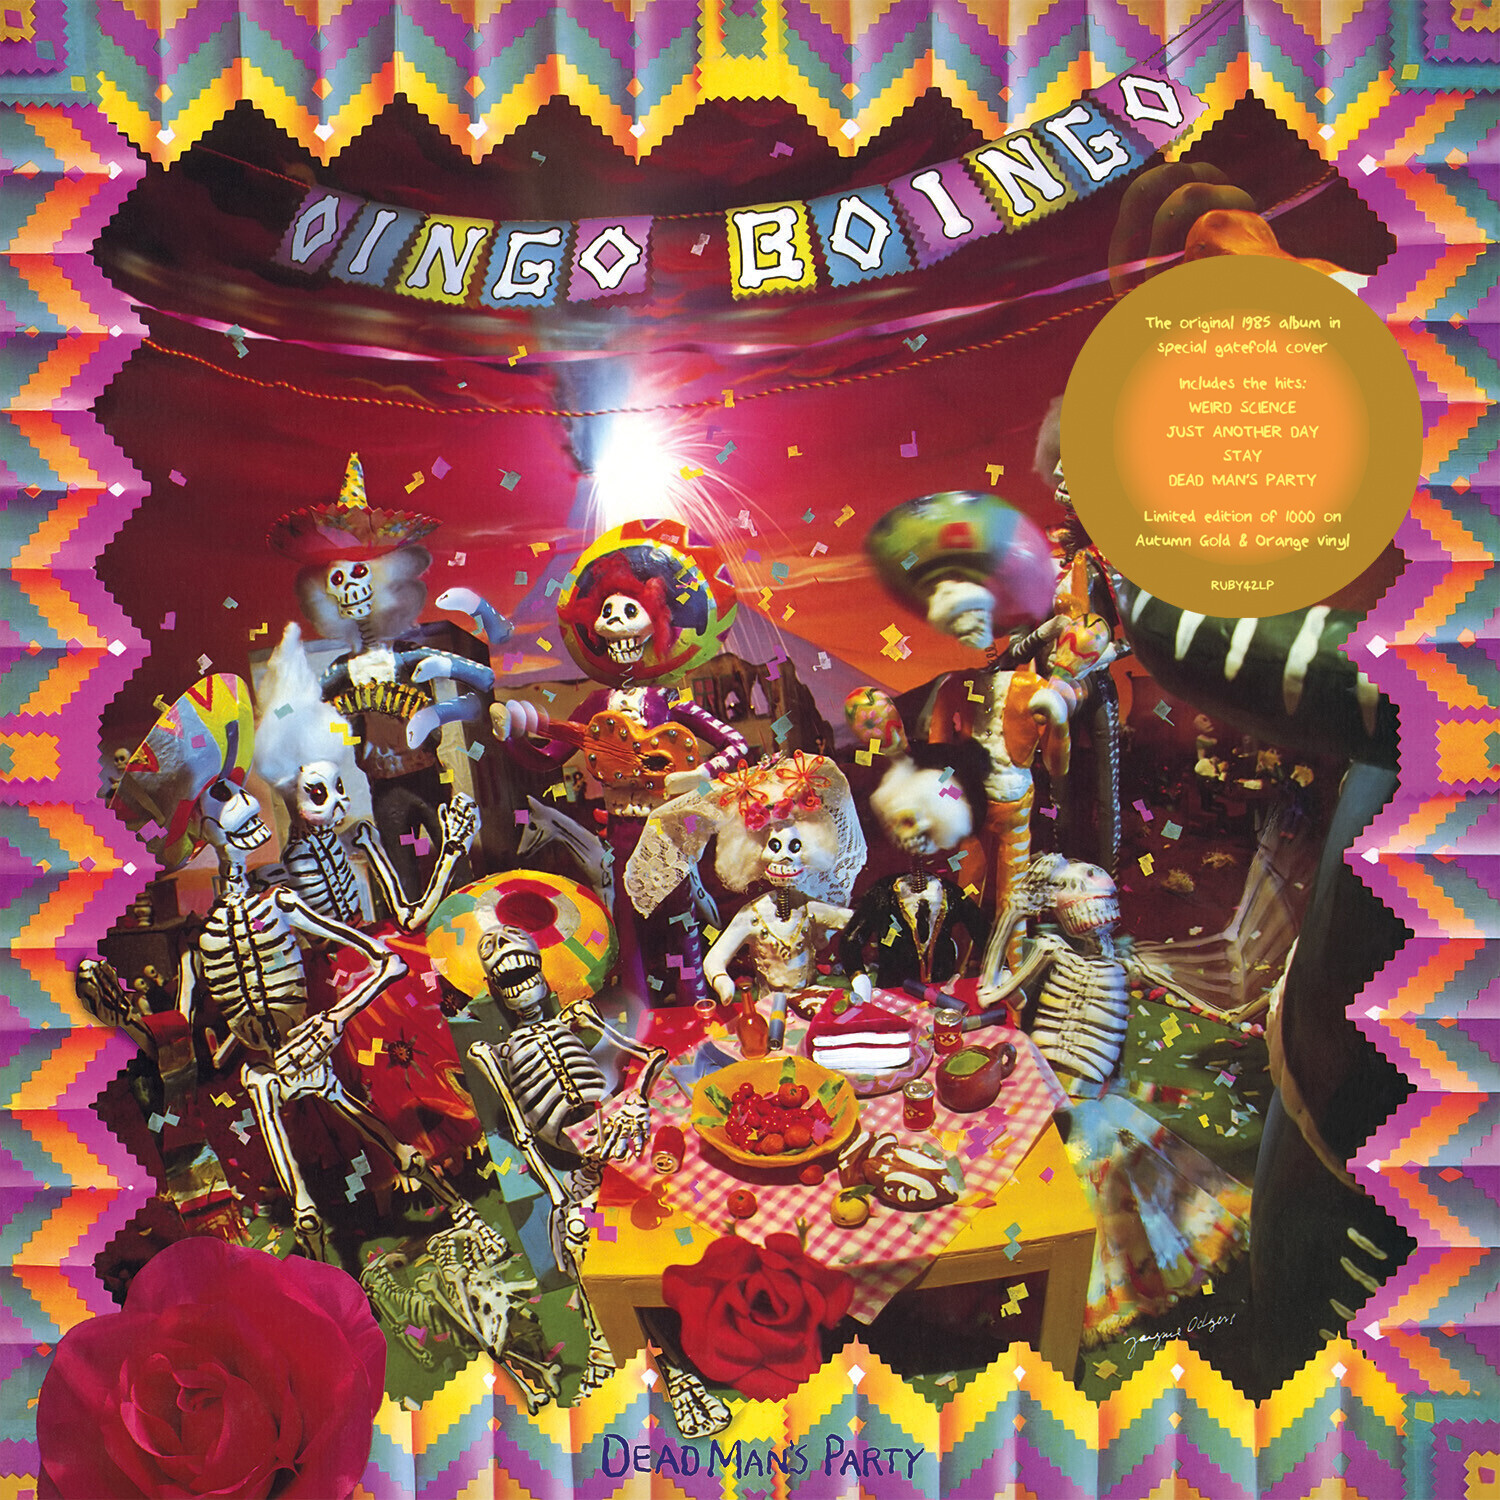 Oingo Boingo / Dead Man's Party gatefold LP: Autumn Gold & Orange vinyl